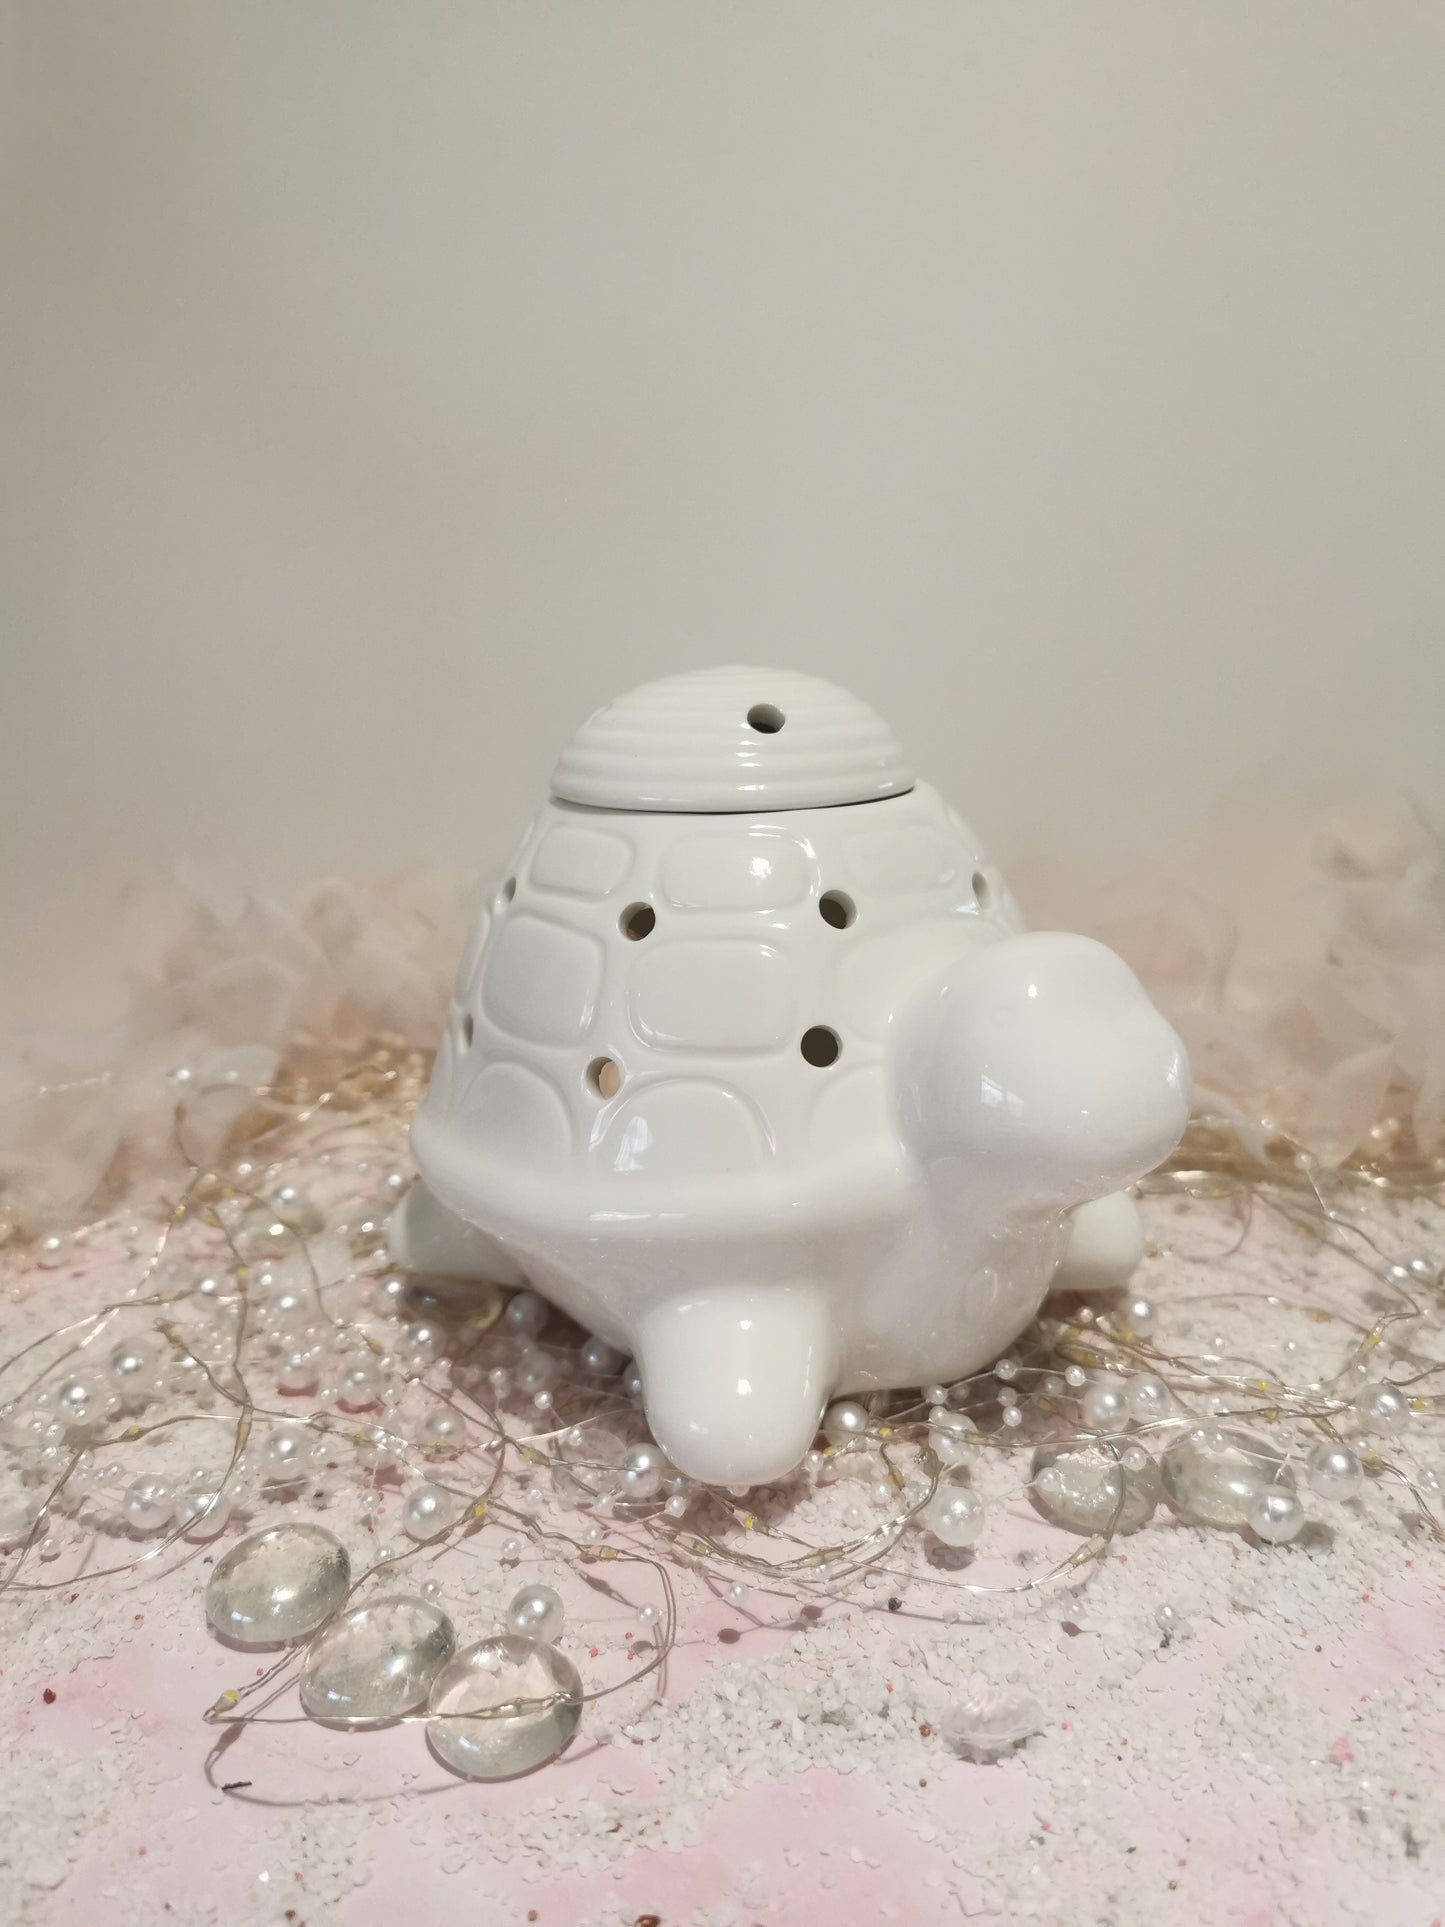 Lety turtle burner in white lacquered ceramic